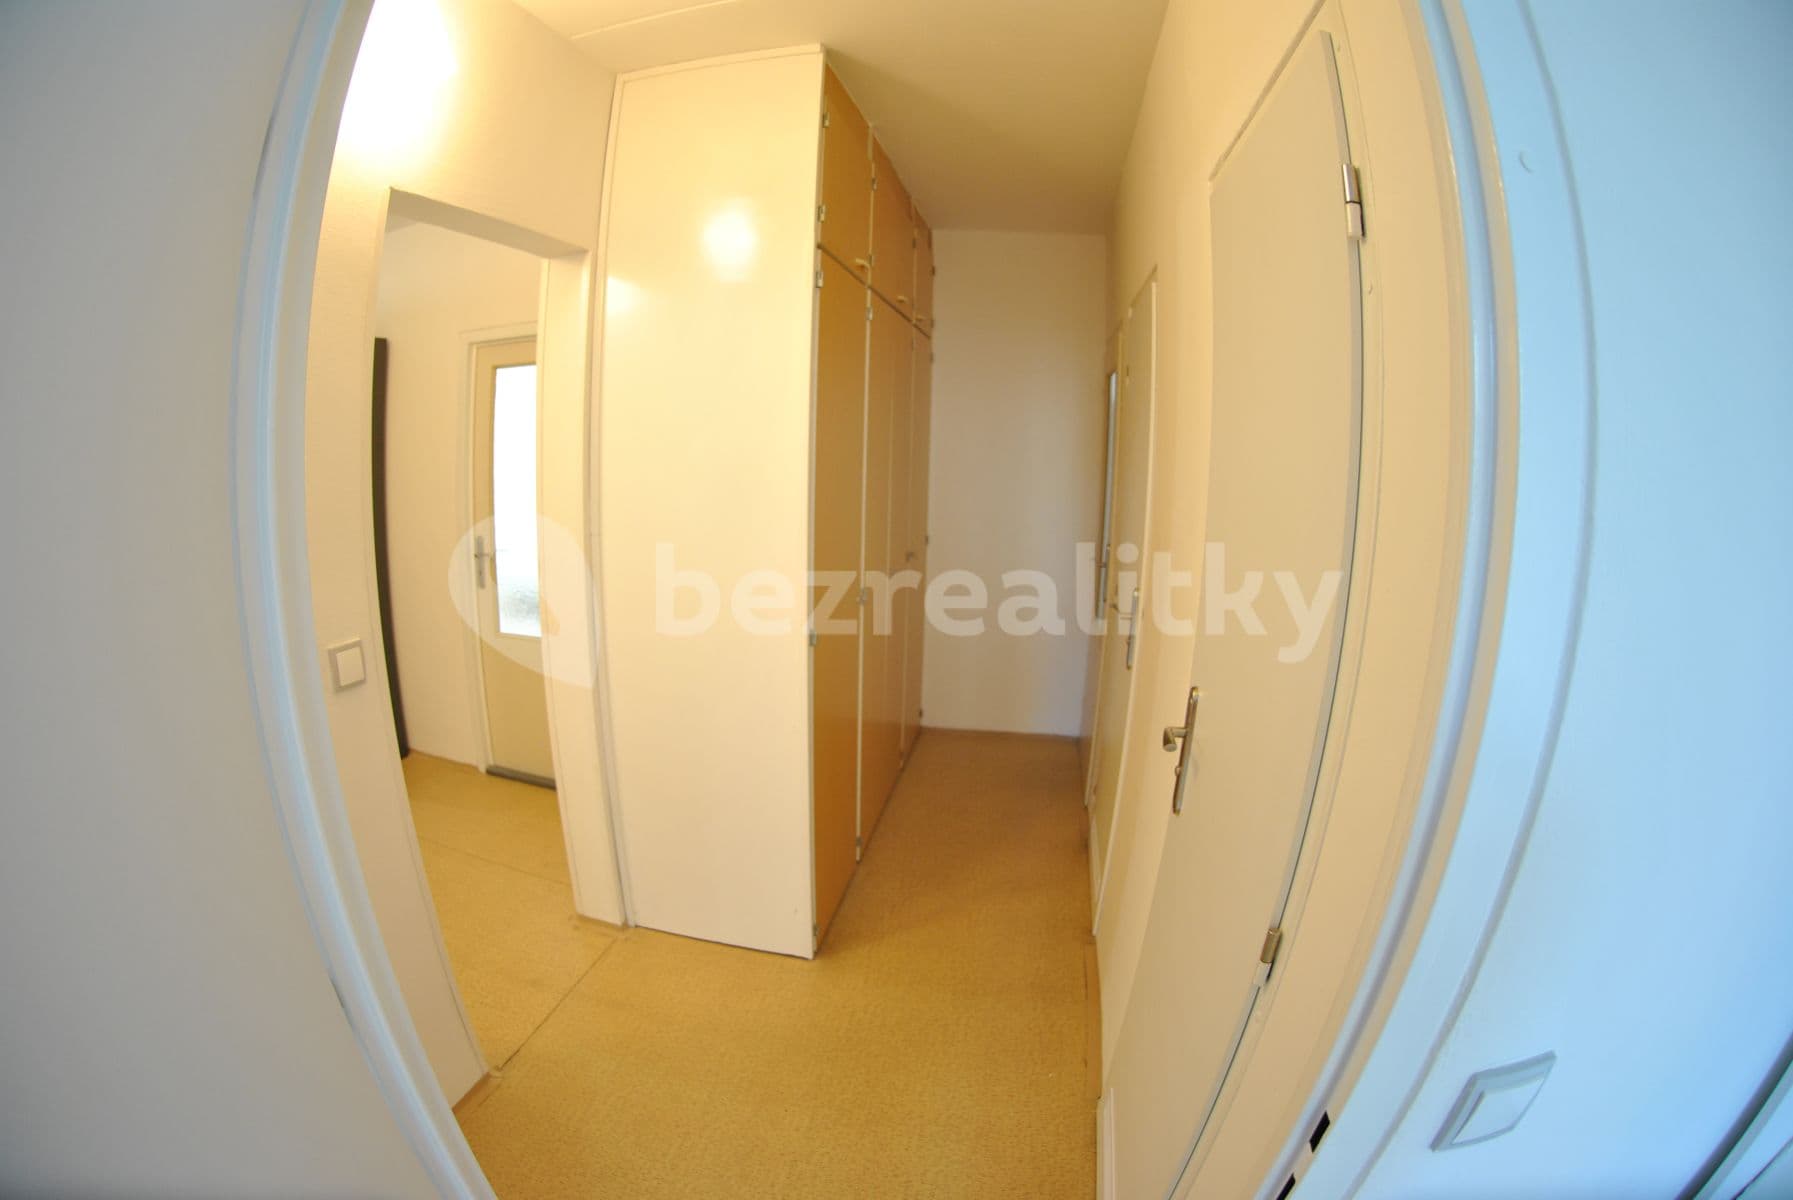 4 bedroom flat to rent, 65 m², Oblá, Brno, Jihomoravský Region